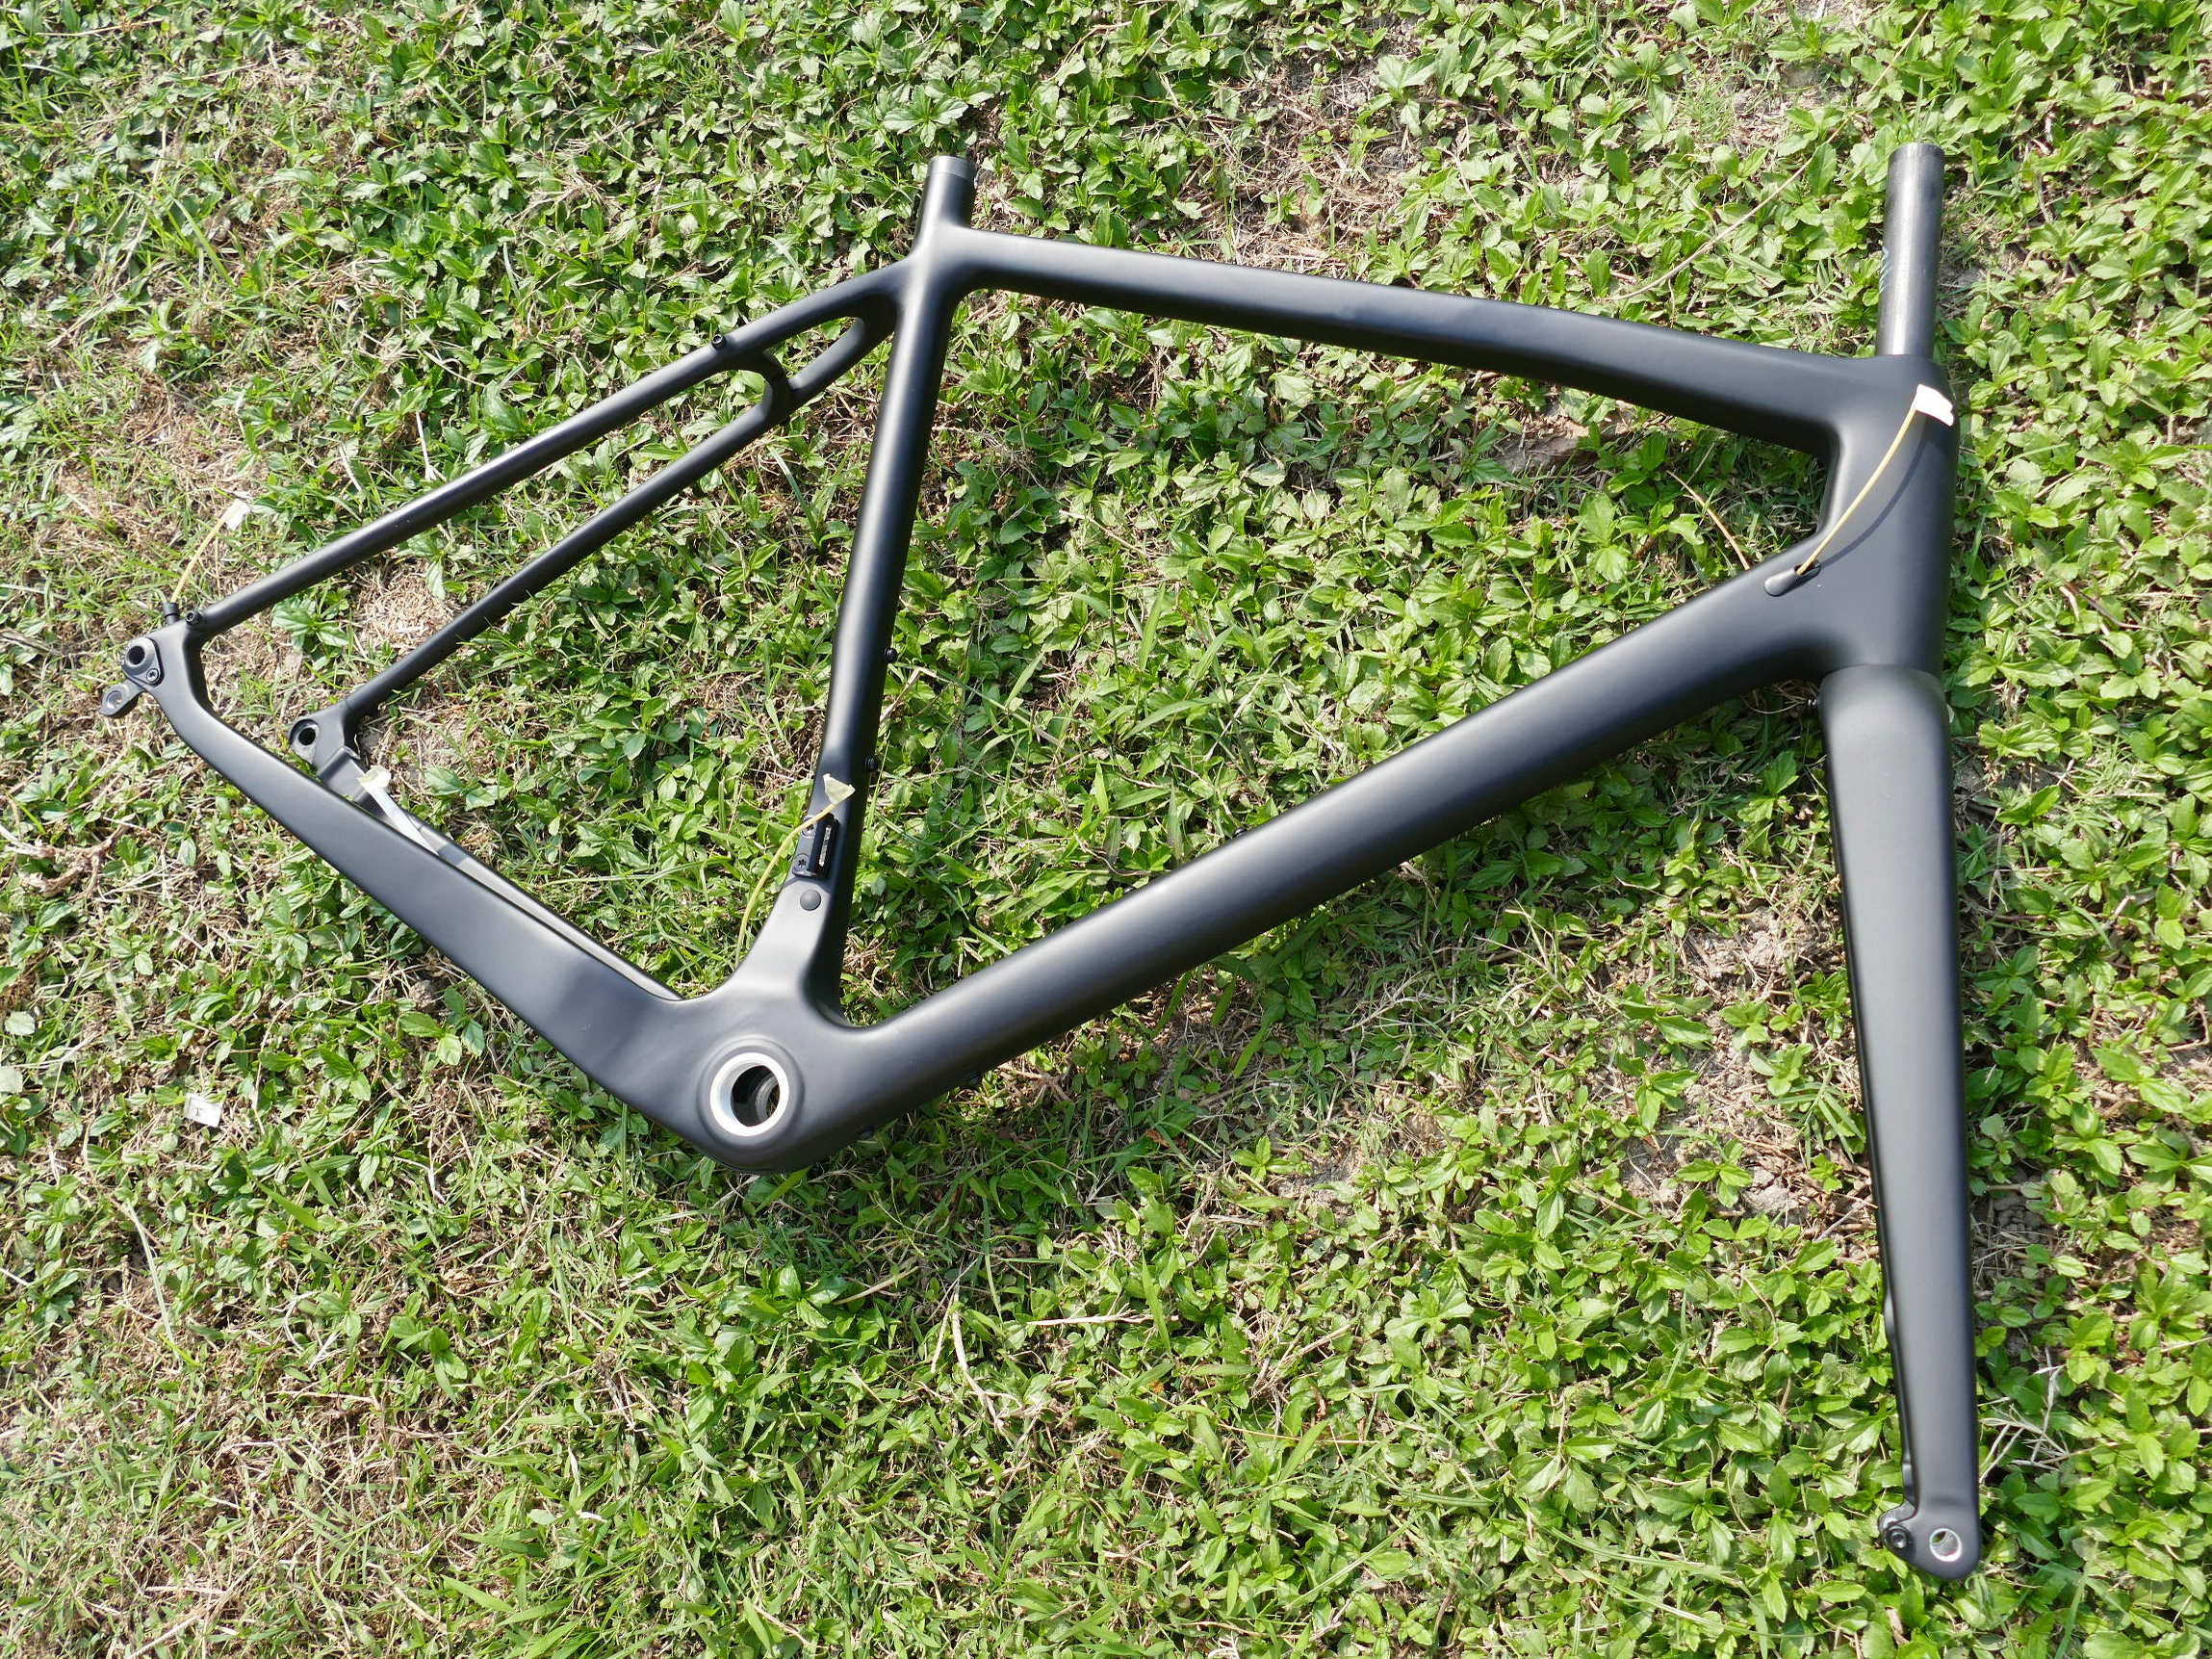 F2 Full Carbon UD Matt Gravel Bike Bicyce Thru Axle Frame Disc brake Fork 46cm, 49cm , 52cm, 54cm , 56cm , 58cm , 61cm